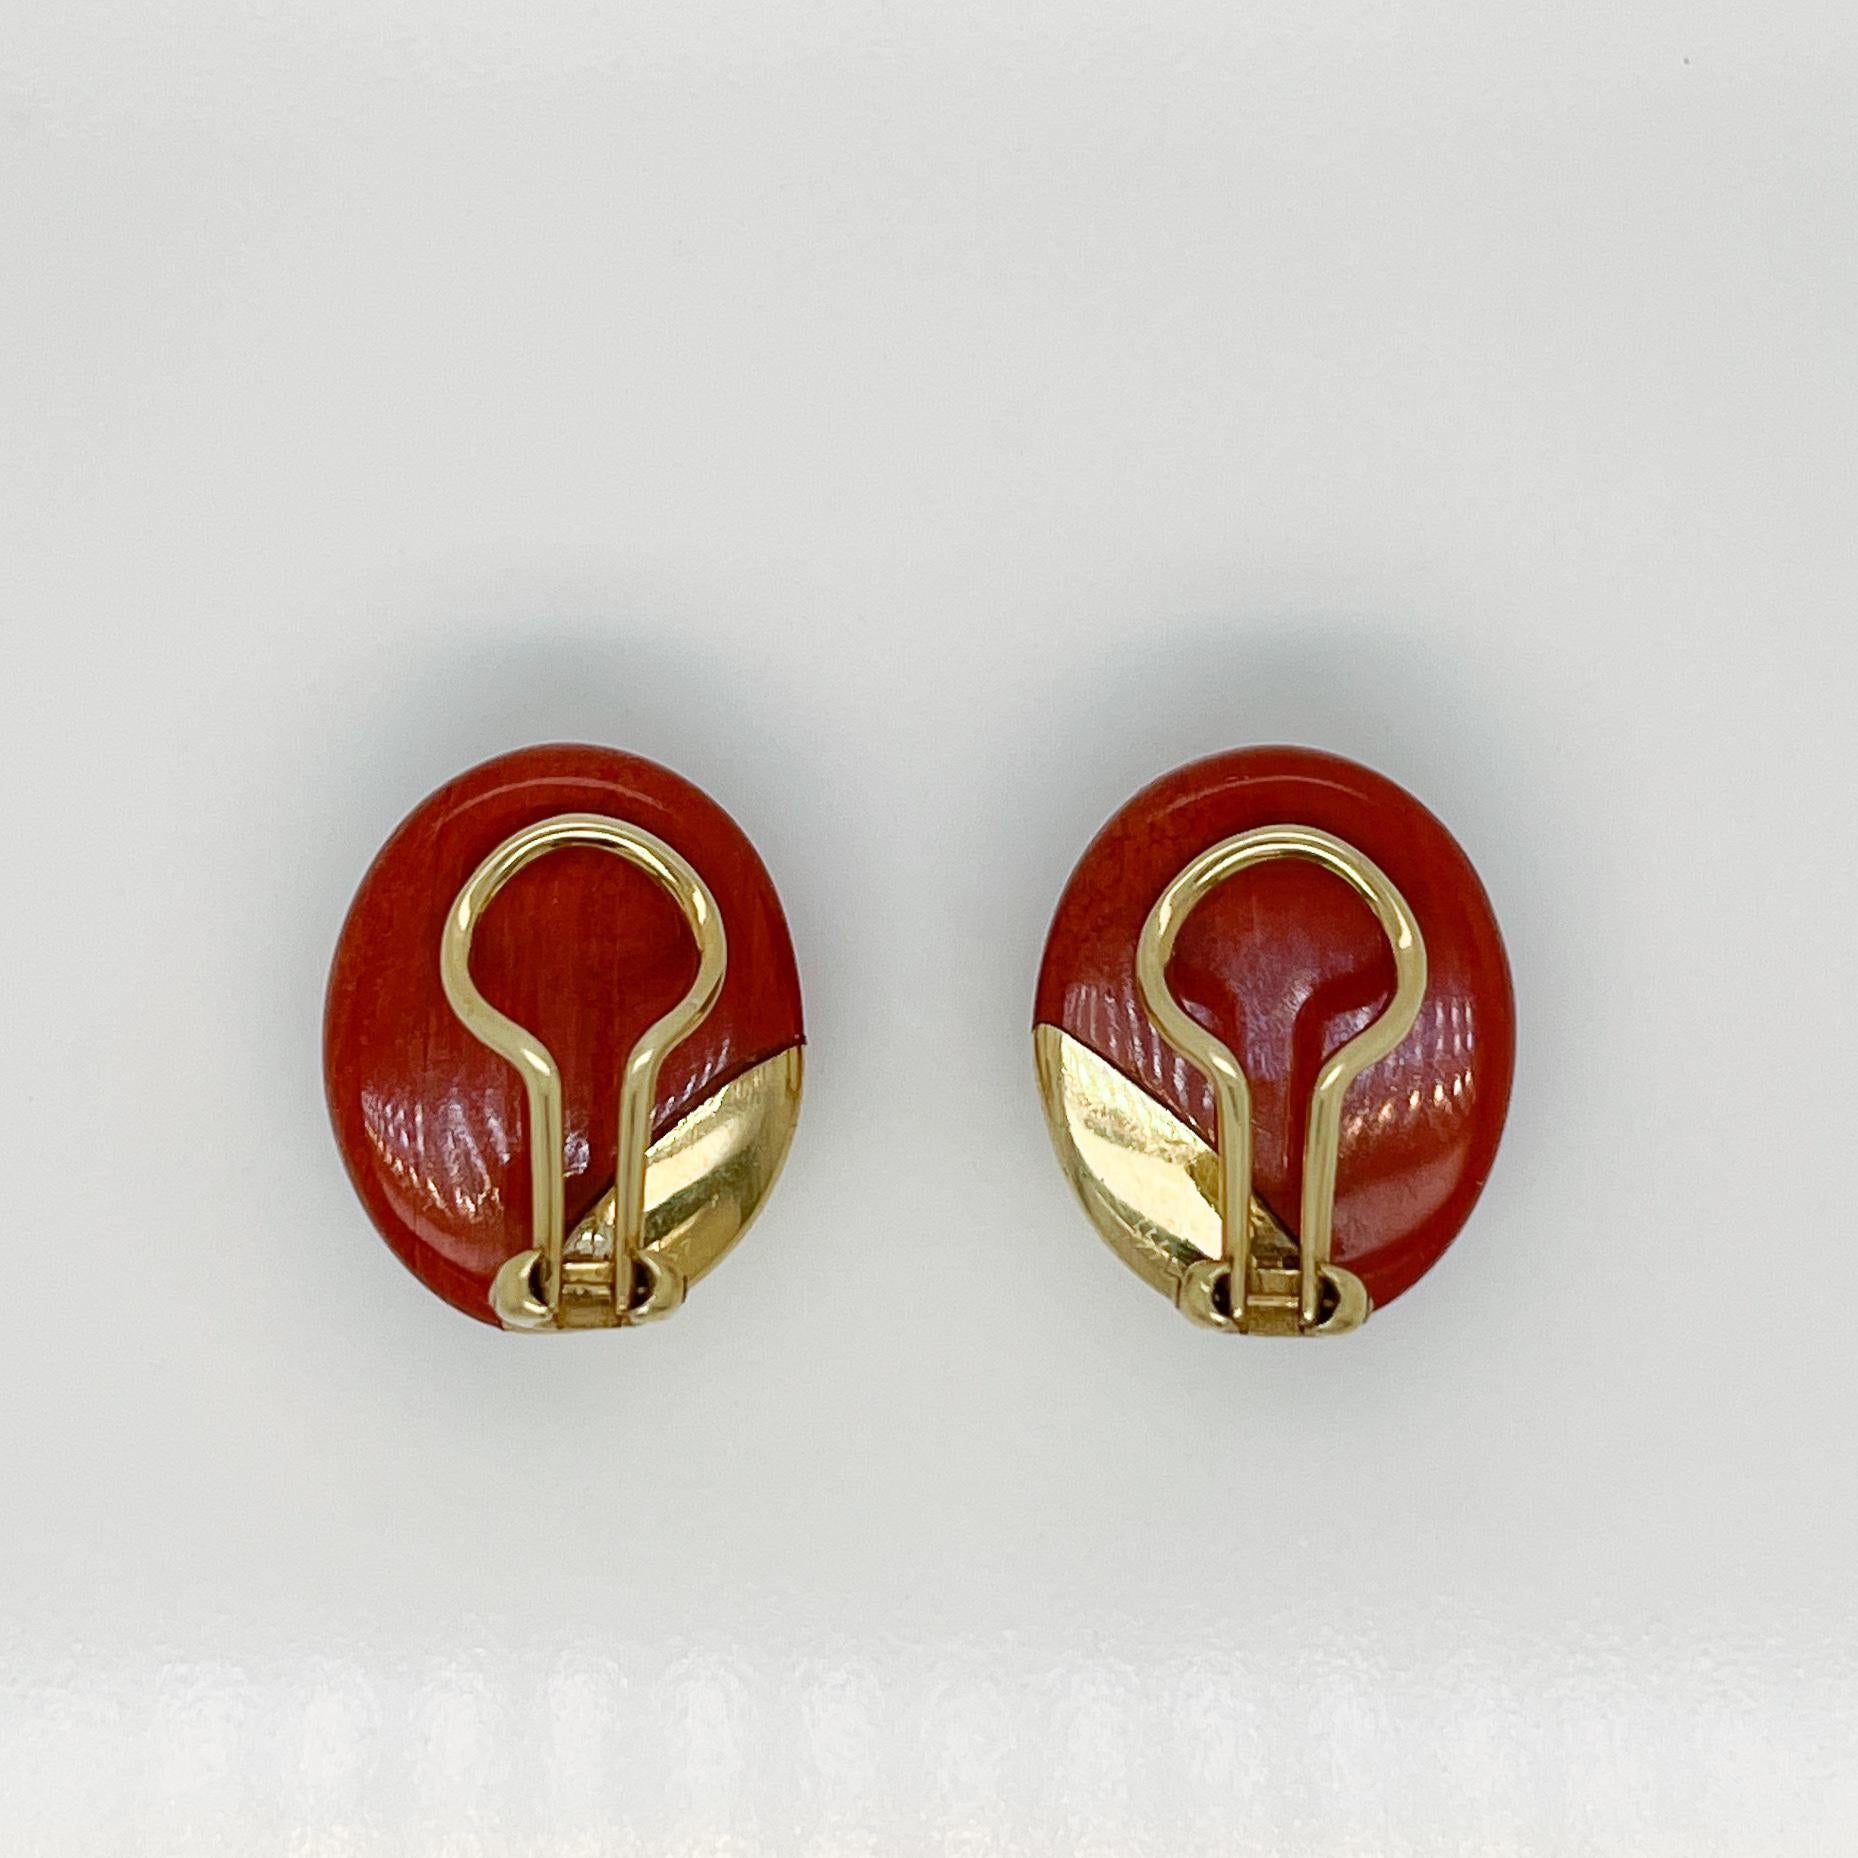 Pair of 18K Gold & Red Jasper Cabochon Earrings attributed to Angela Cummings 1